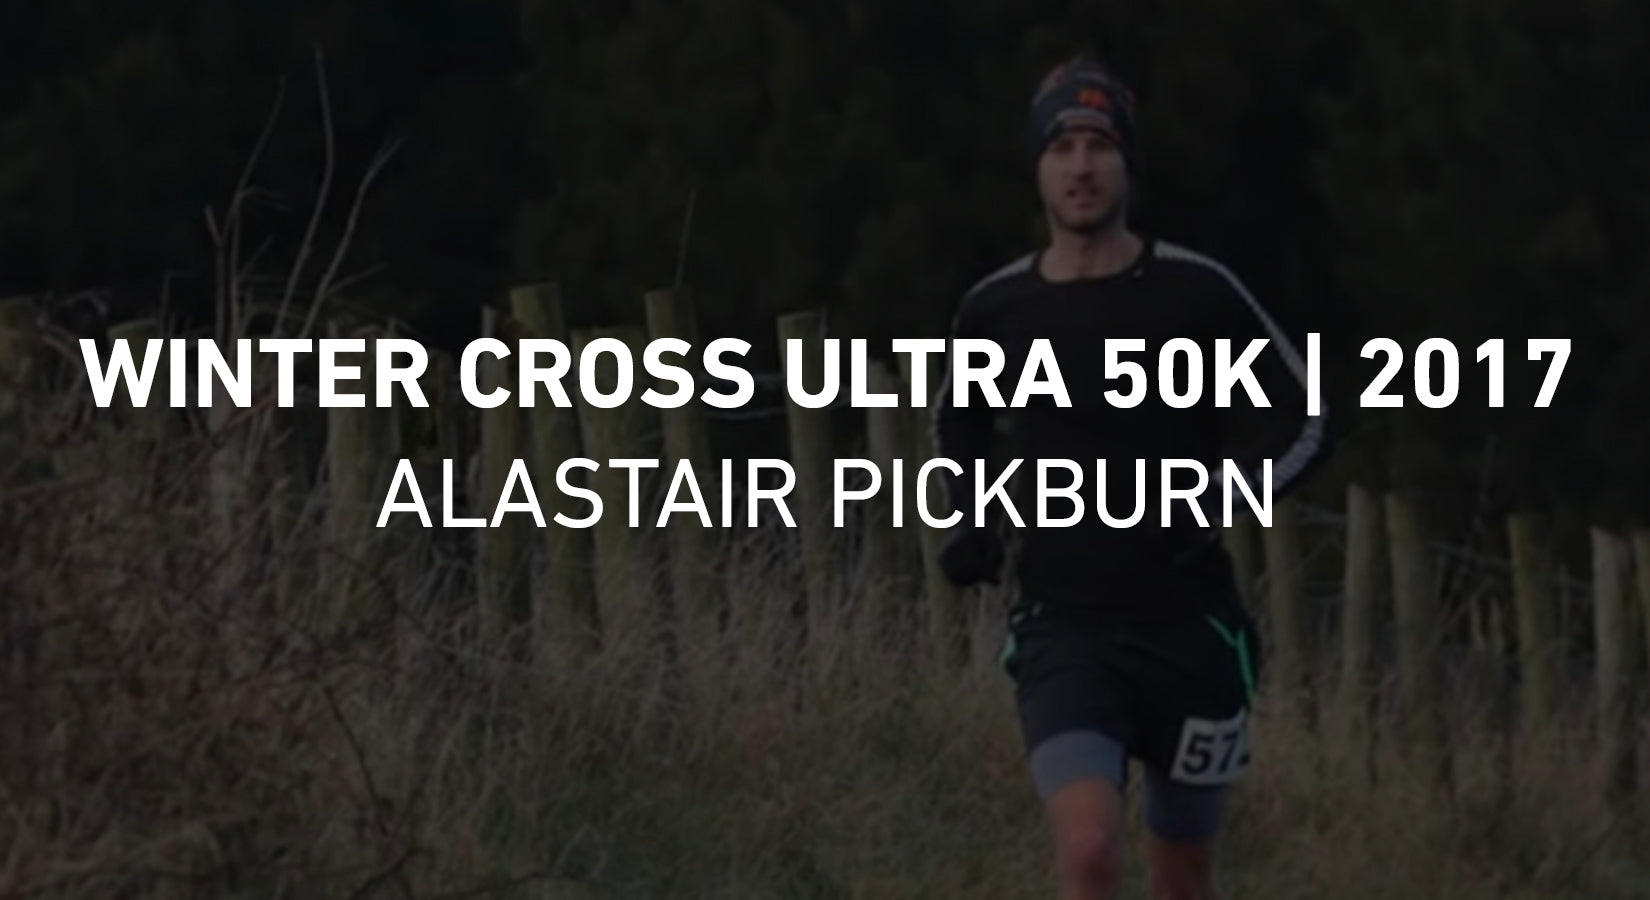 Winter Cross Ultra 50k - Alastair Pickburn - 2017